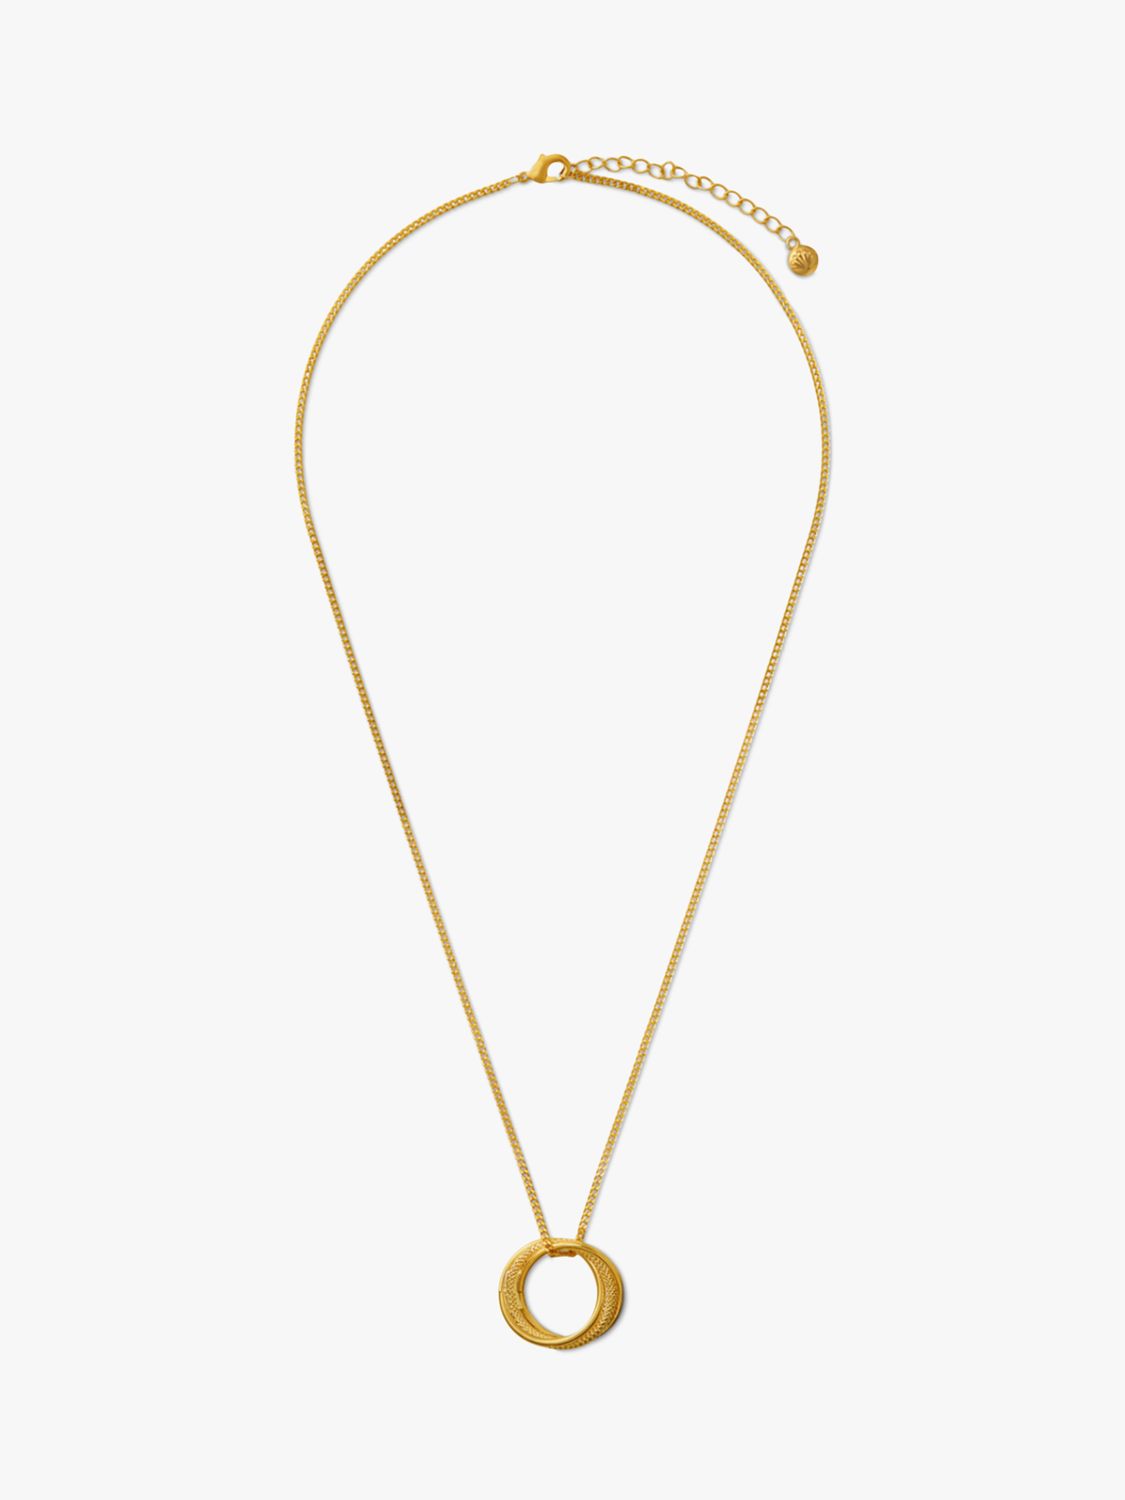 Orelia Textured Interlocking Open Circle Necklace, Gold